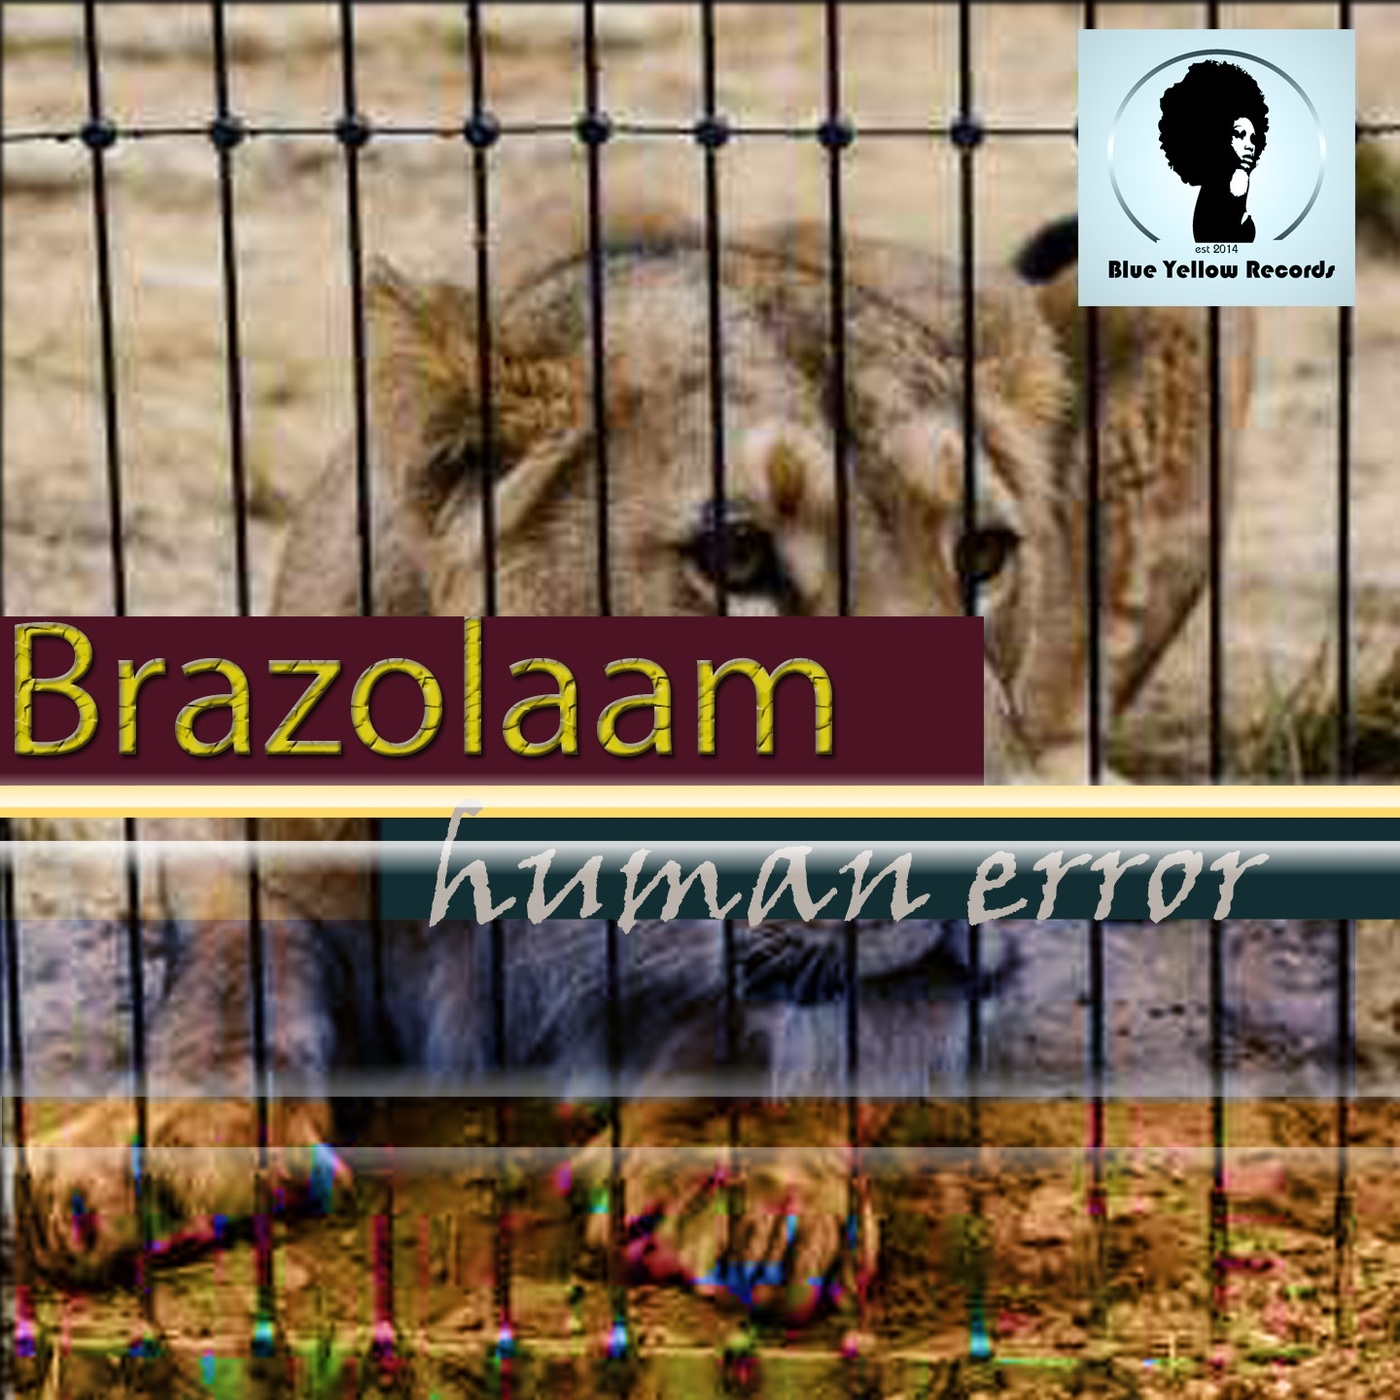 Brazolaam - Human Error / Blue Yellow Records